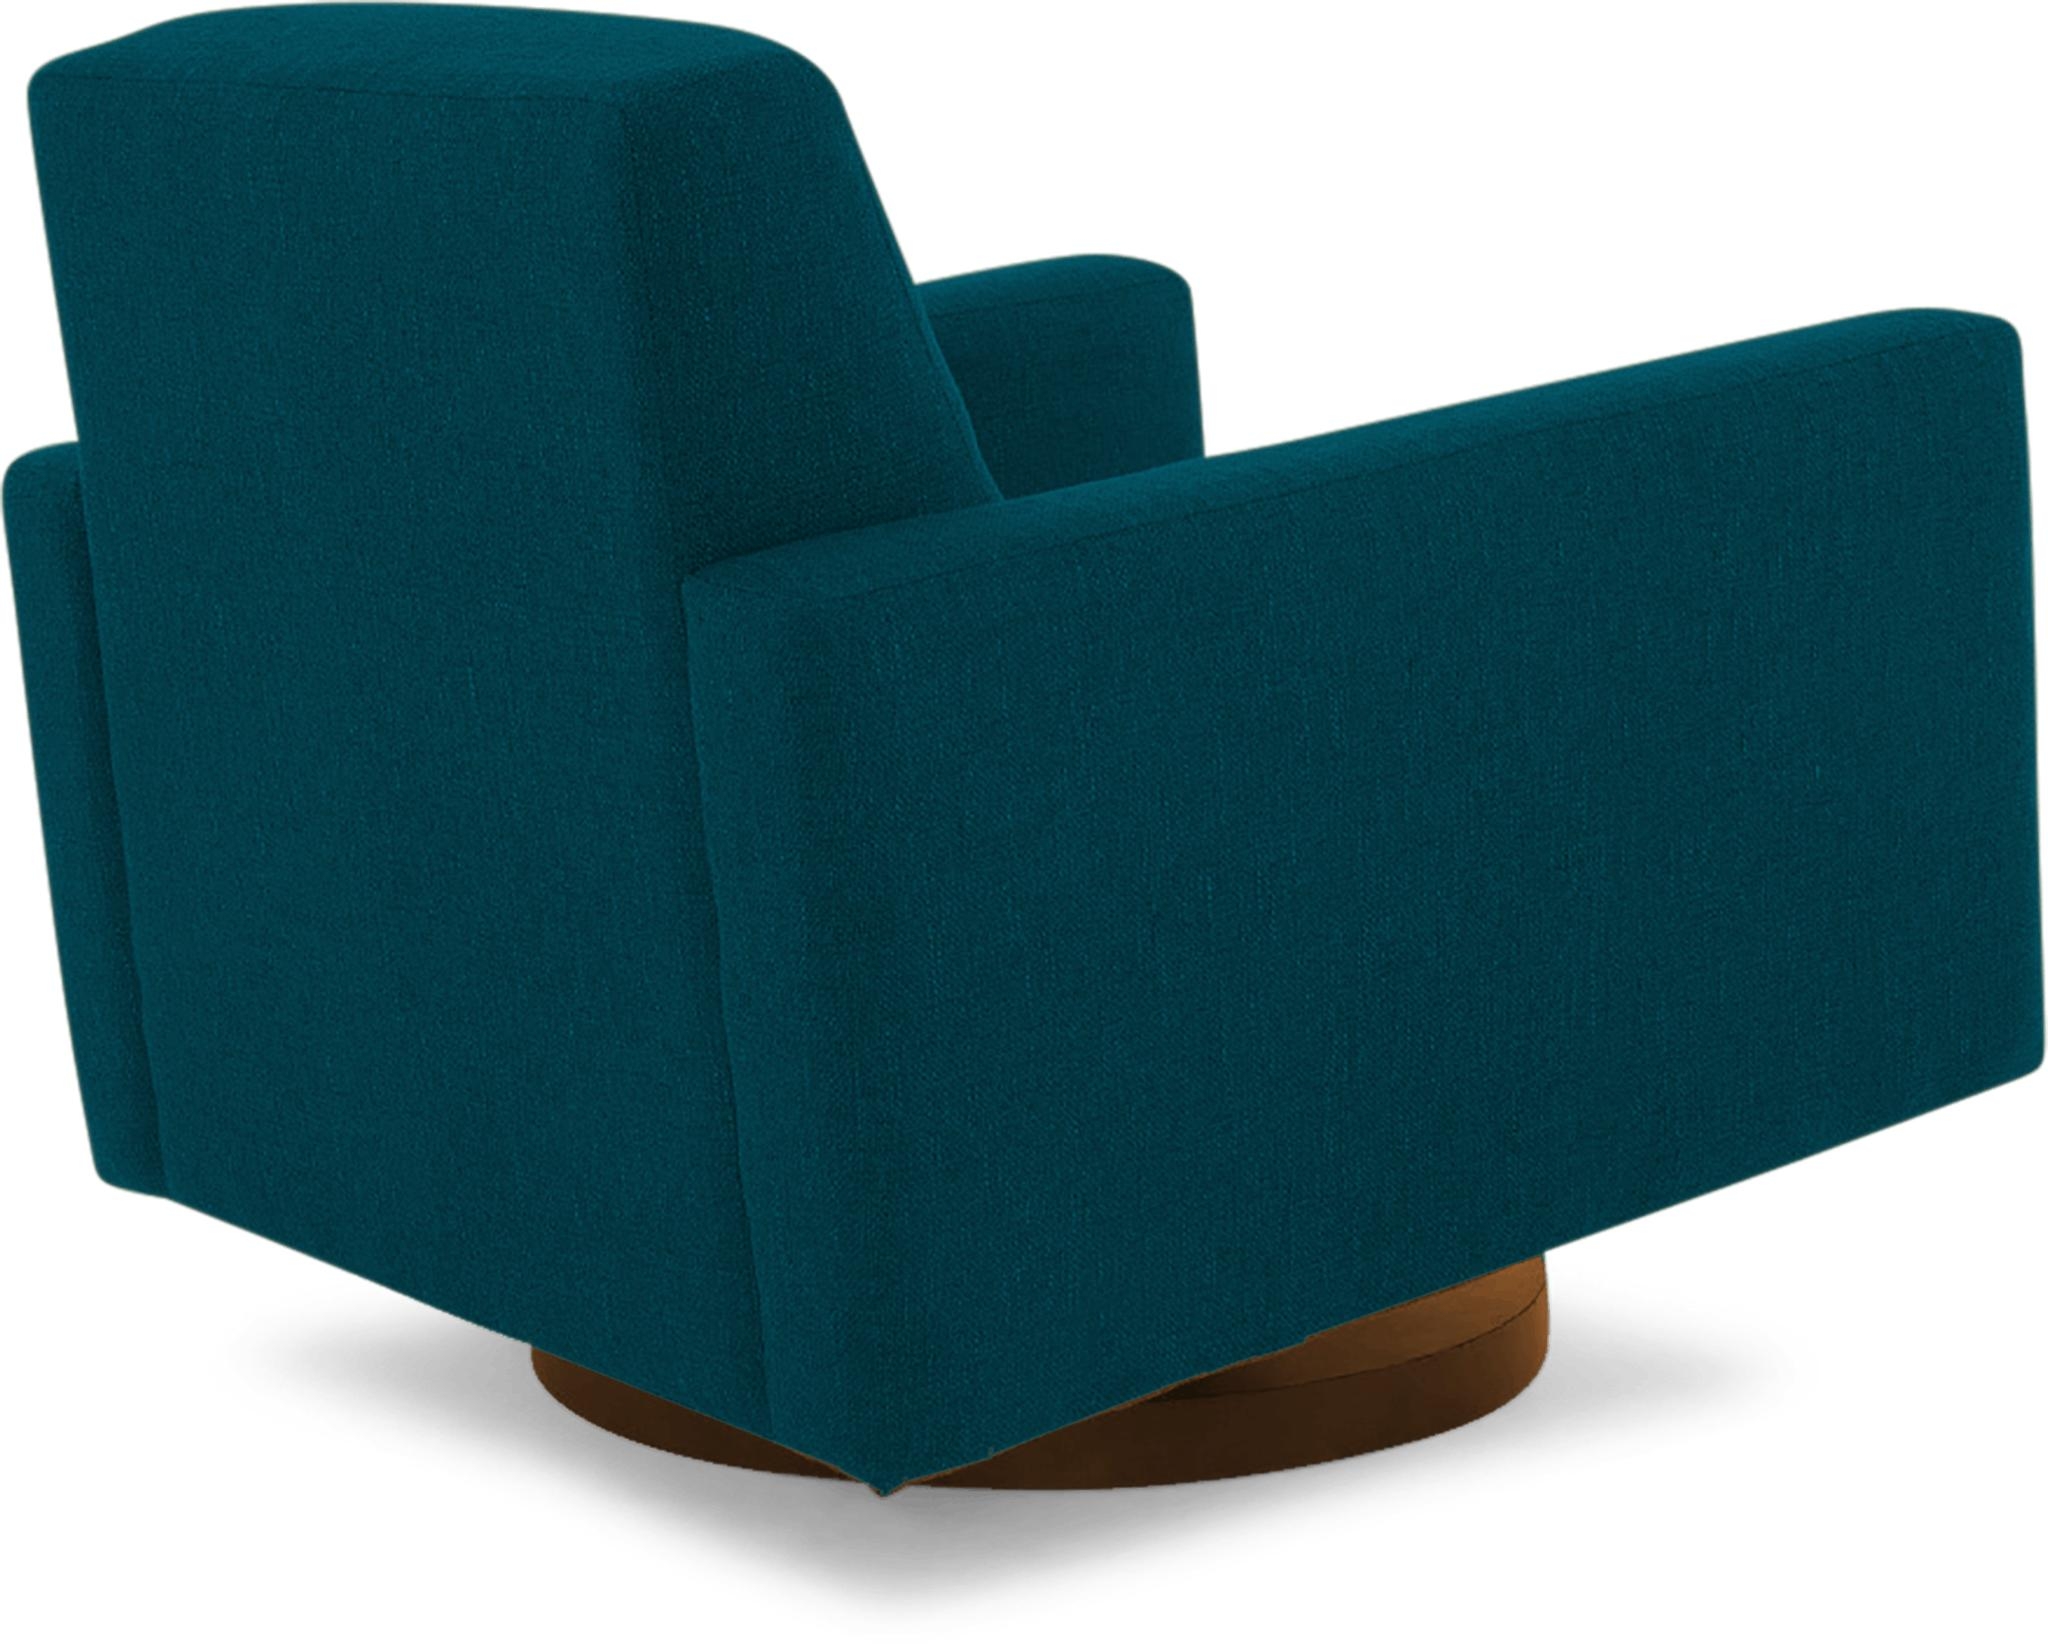 Blue Korver Mid Century Modern Swivel Chair - Key Largo Zenith Teal - Mocha - Image 3